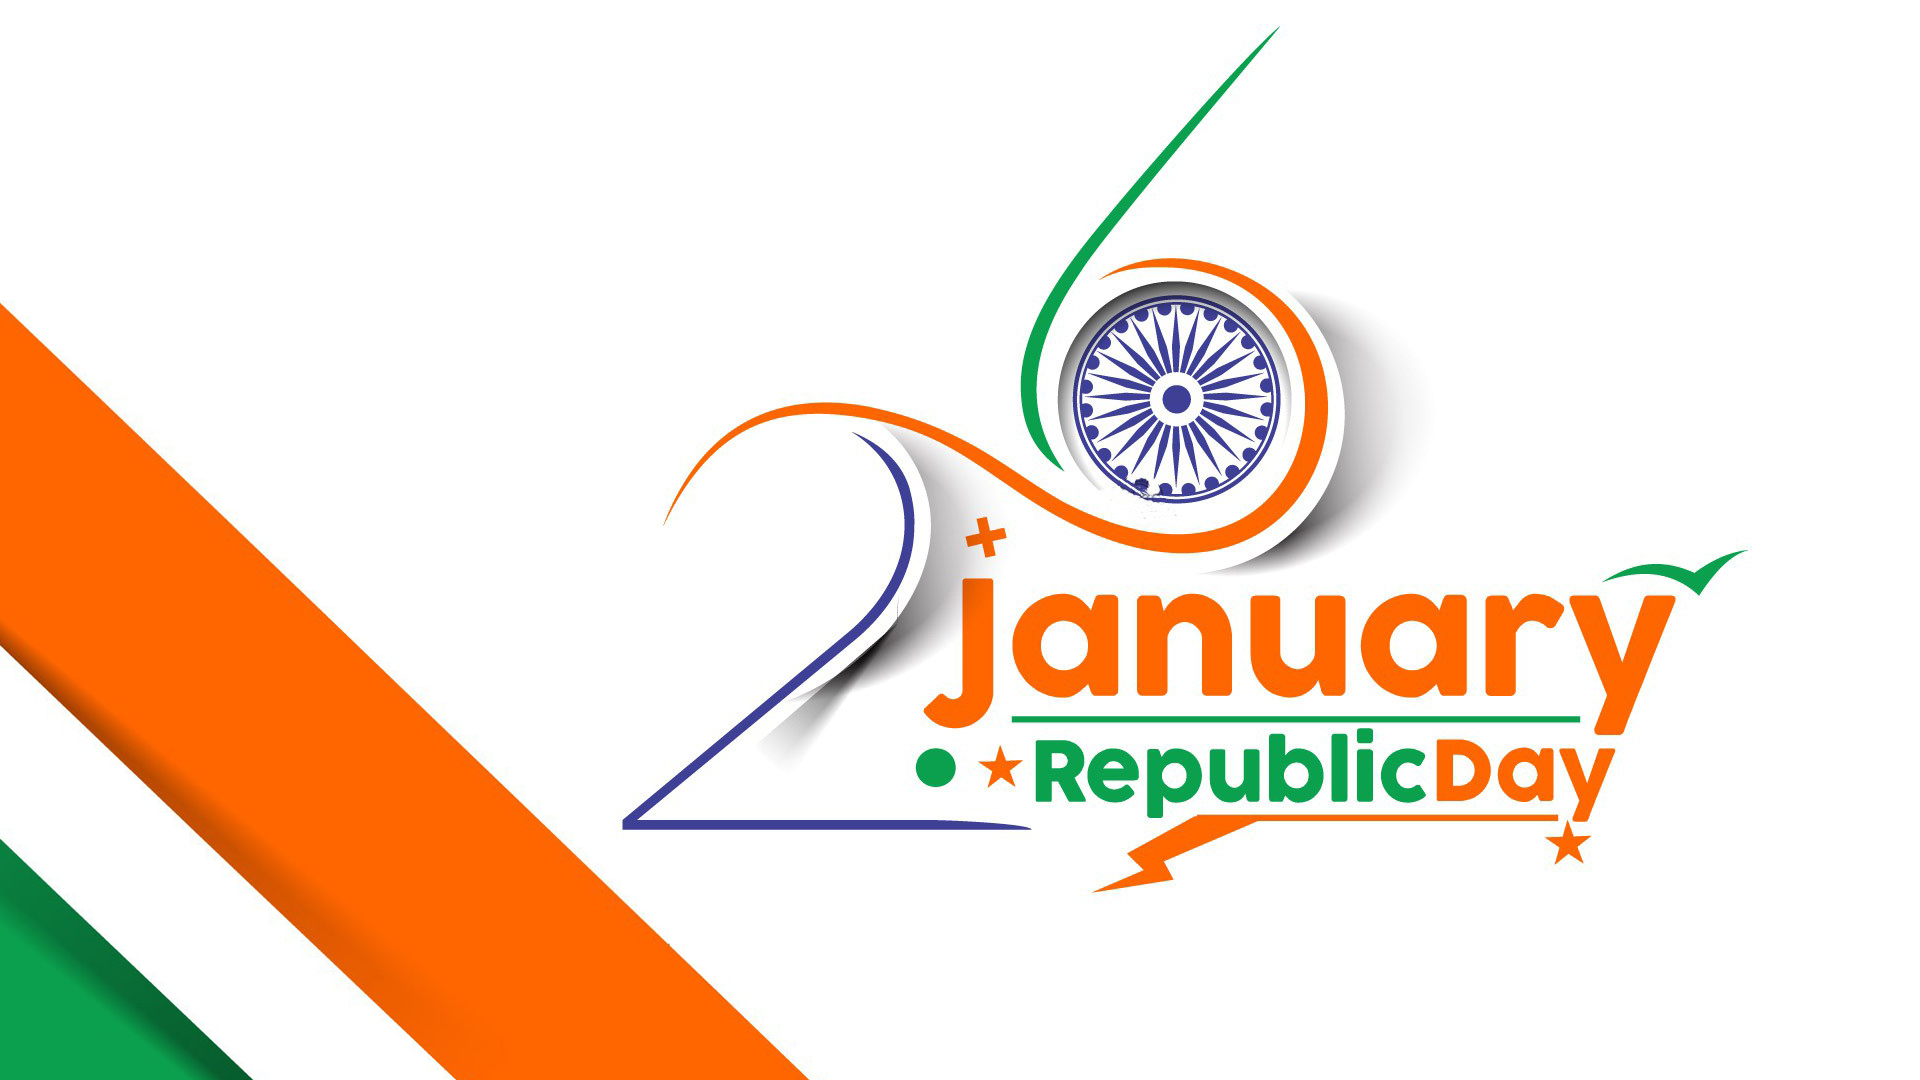 Republic Day Background Images For Desktop